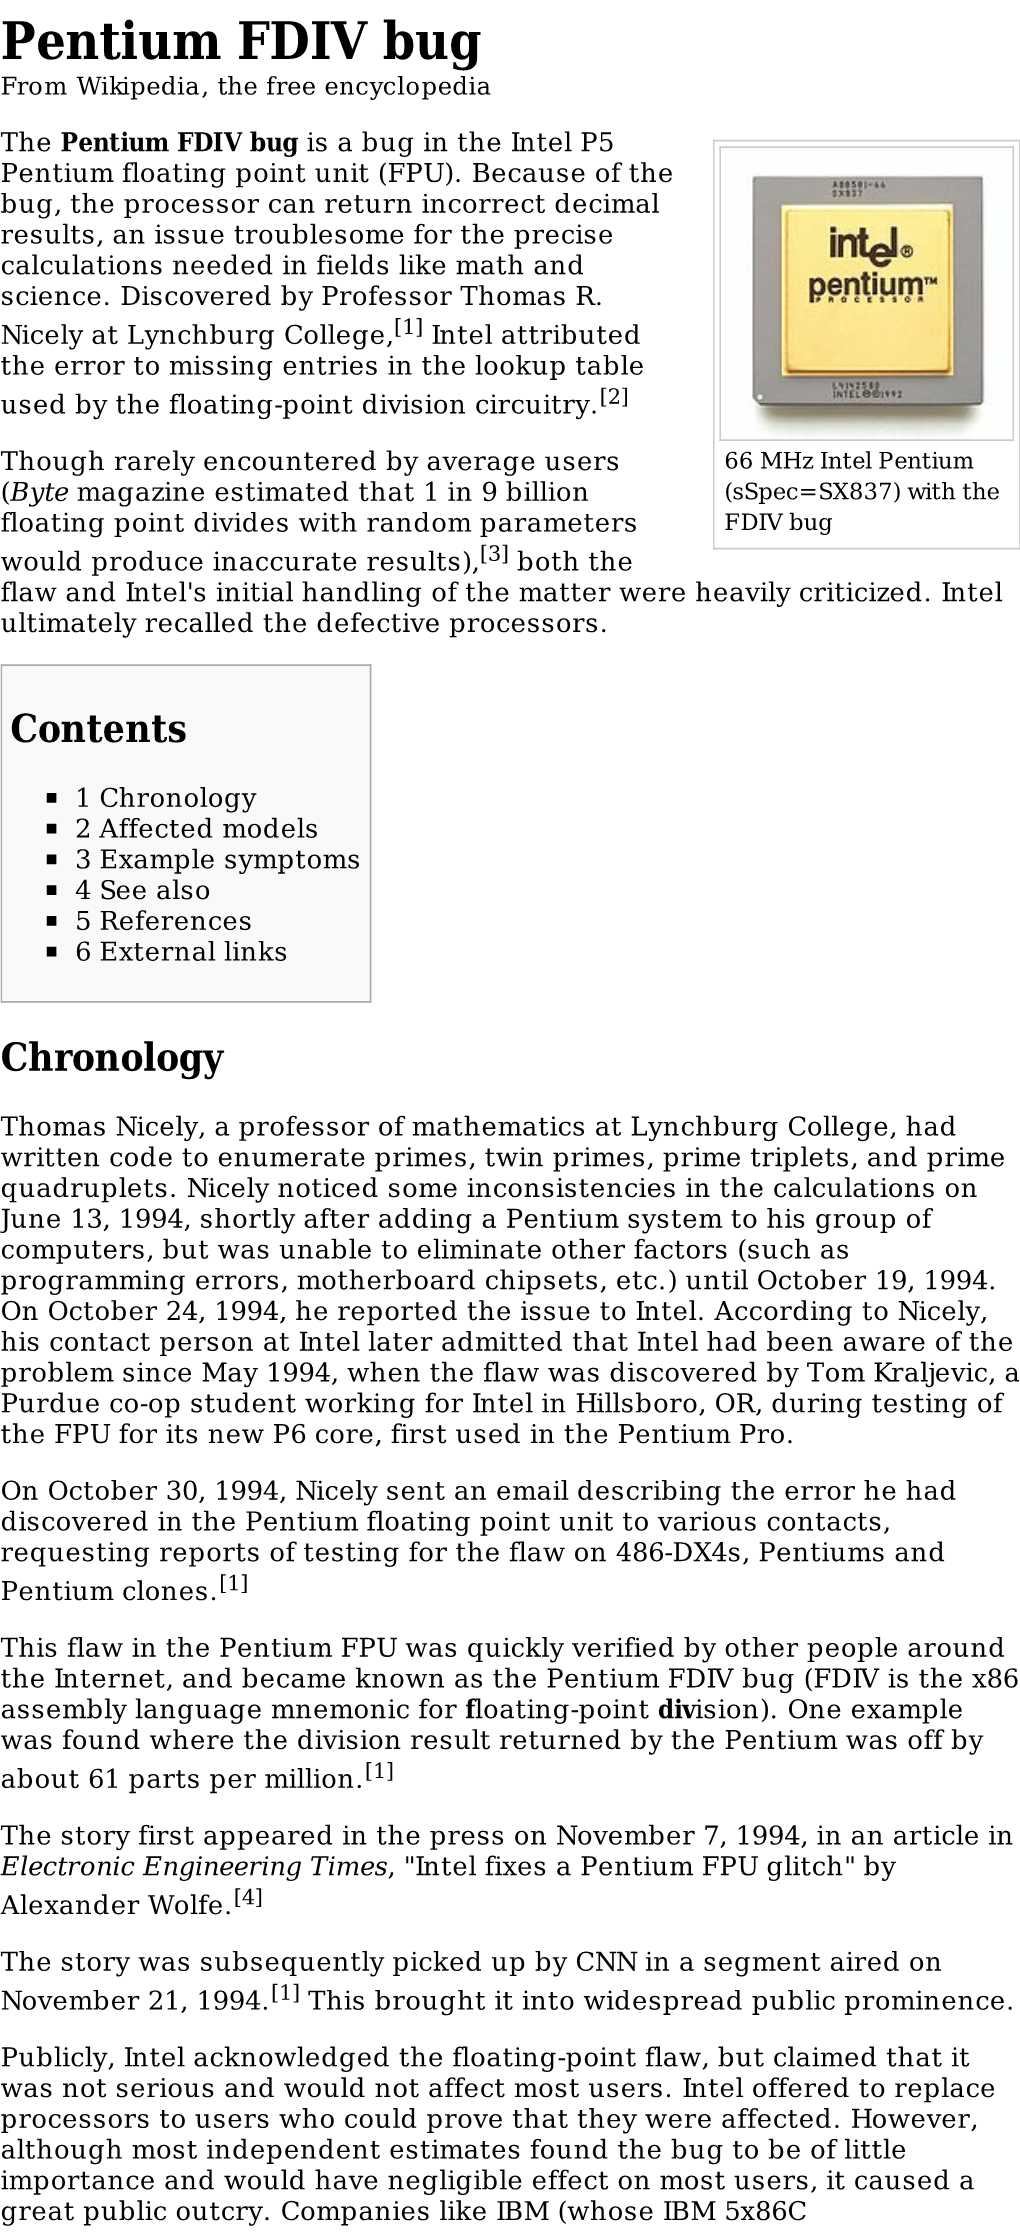 Pentium FDIV Bug from Wikipedia, the Free Encyclopedia